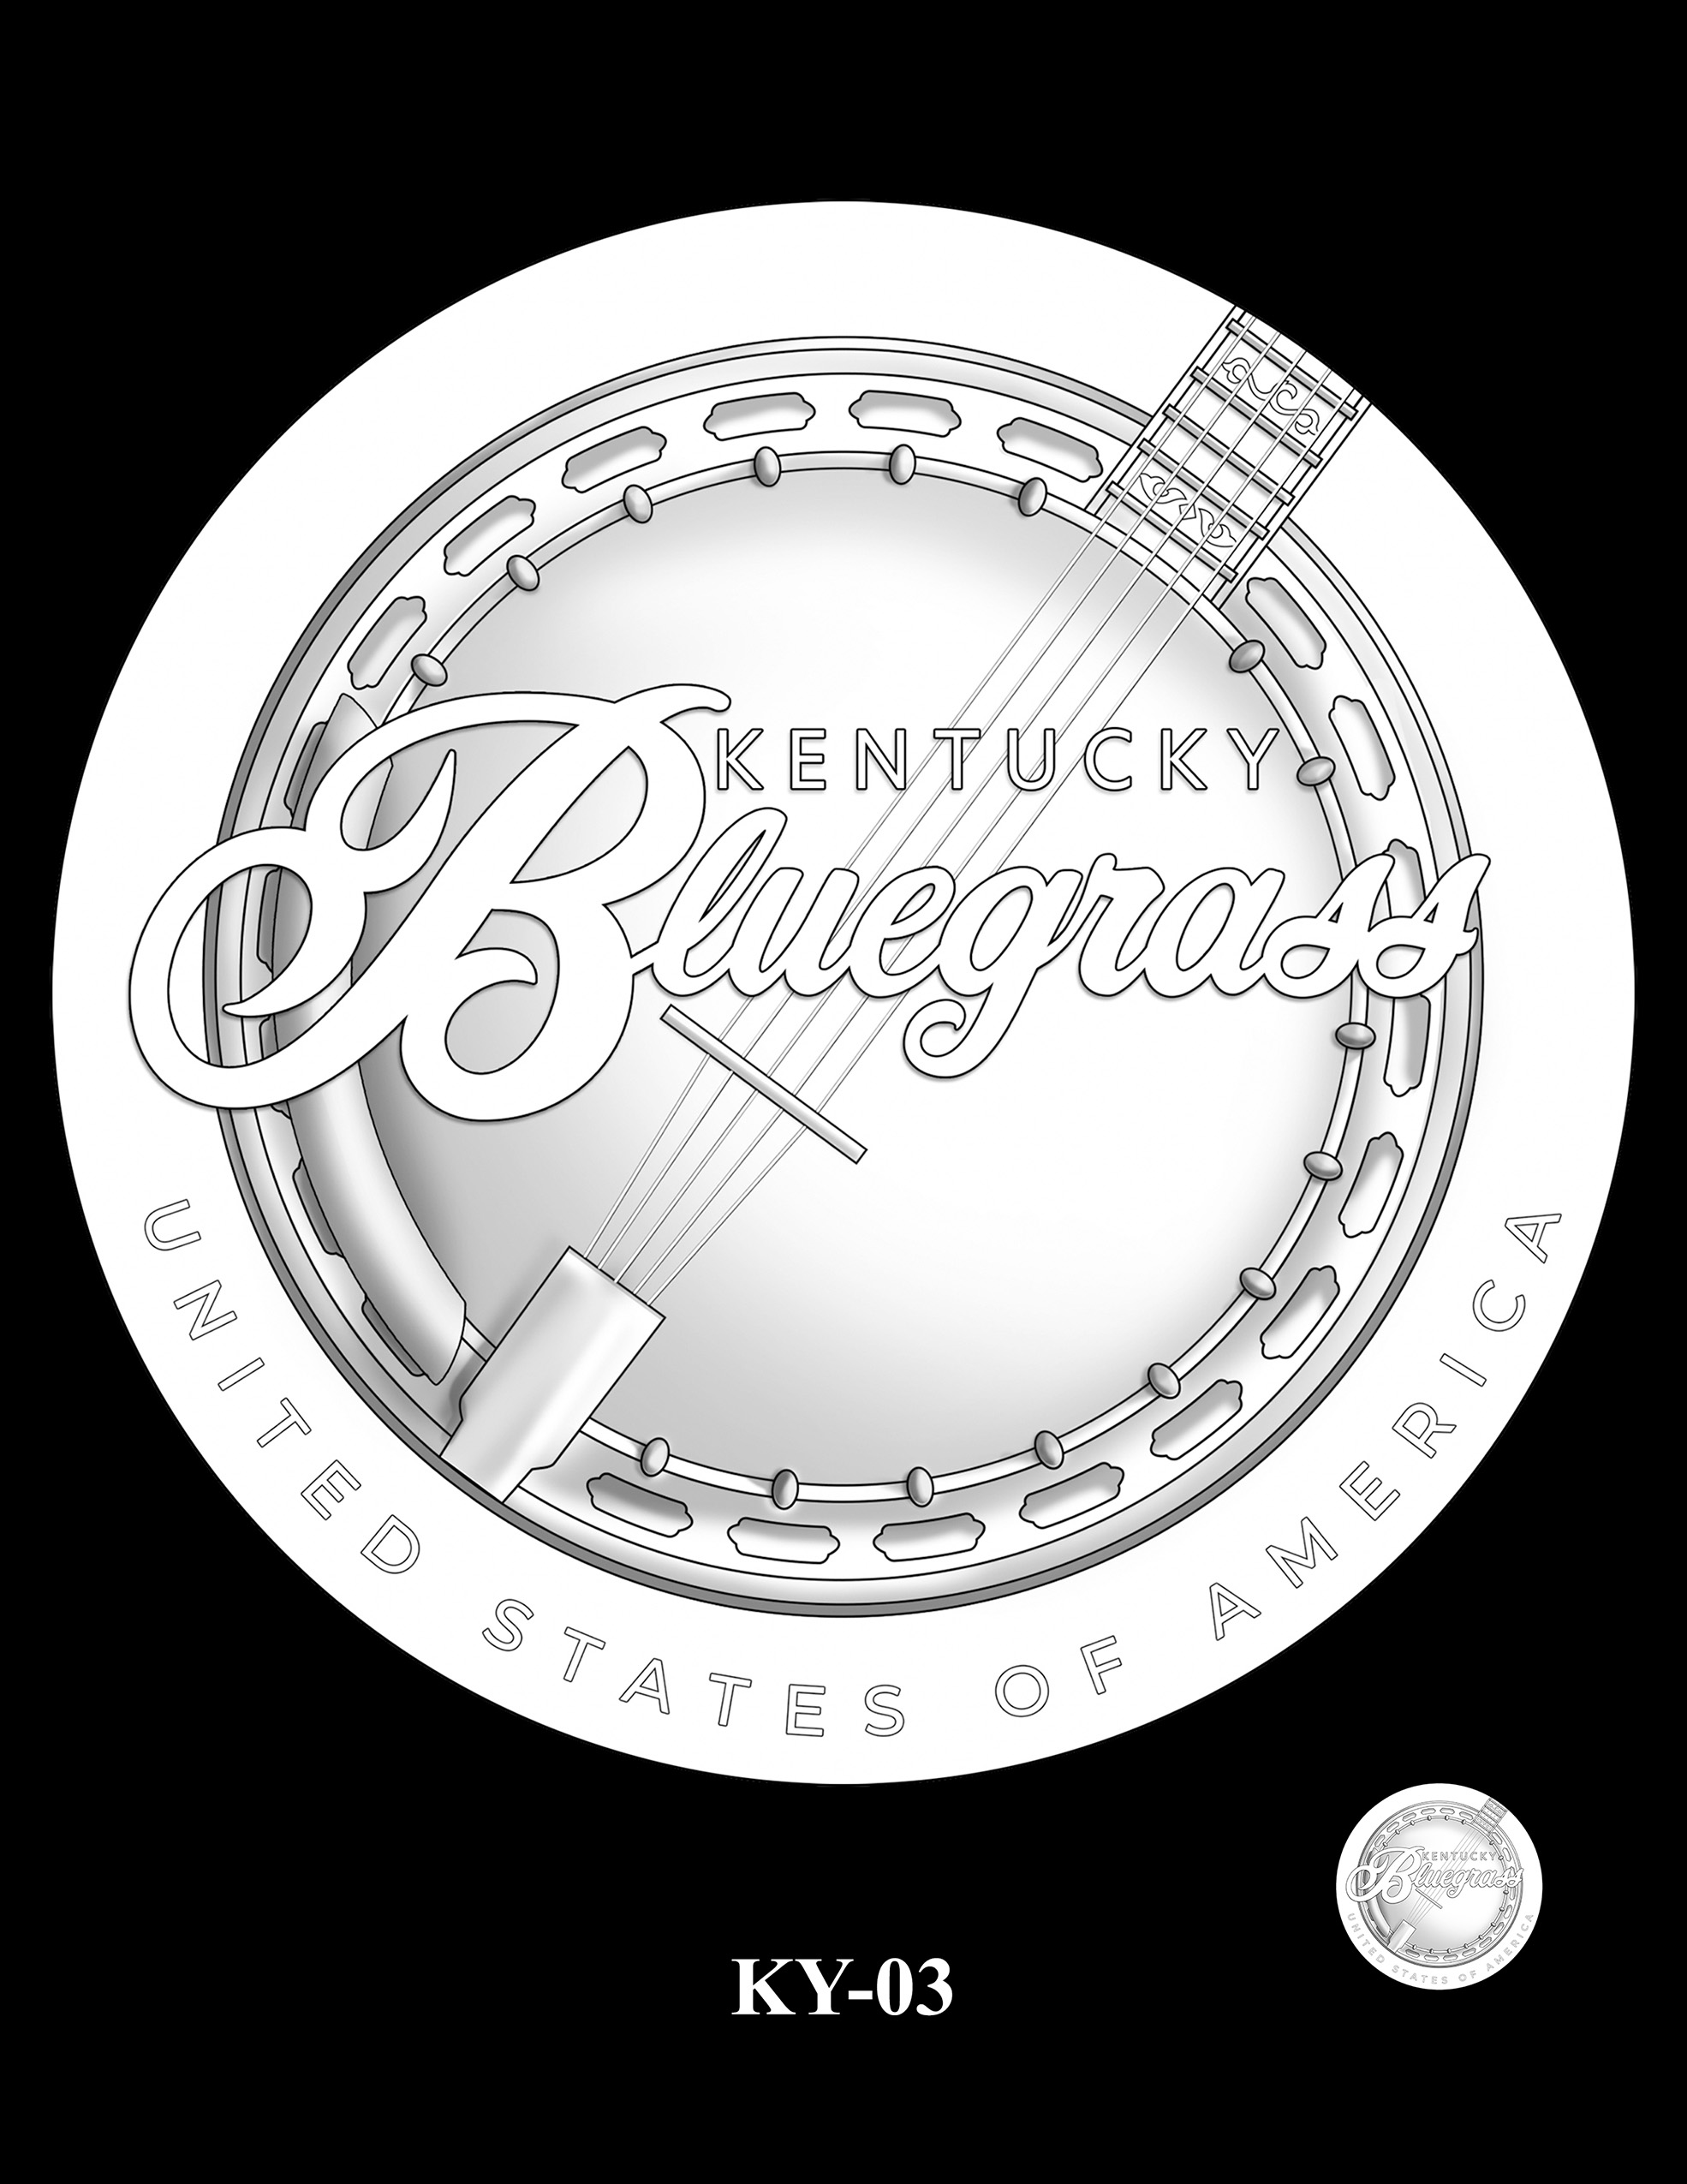 KY-03 -- 2022 American Innovation $1 Coin - Kentucky